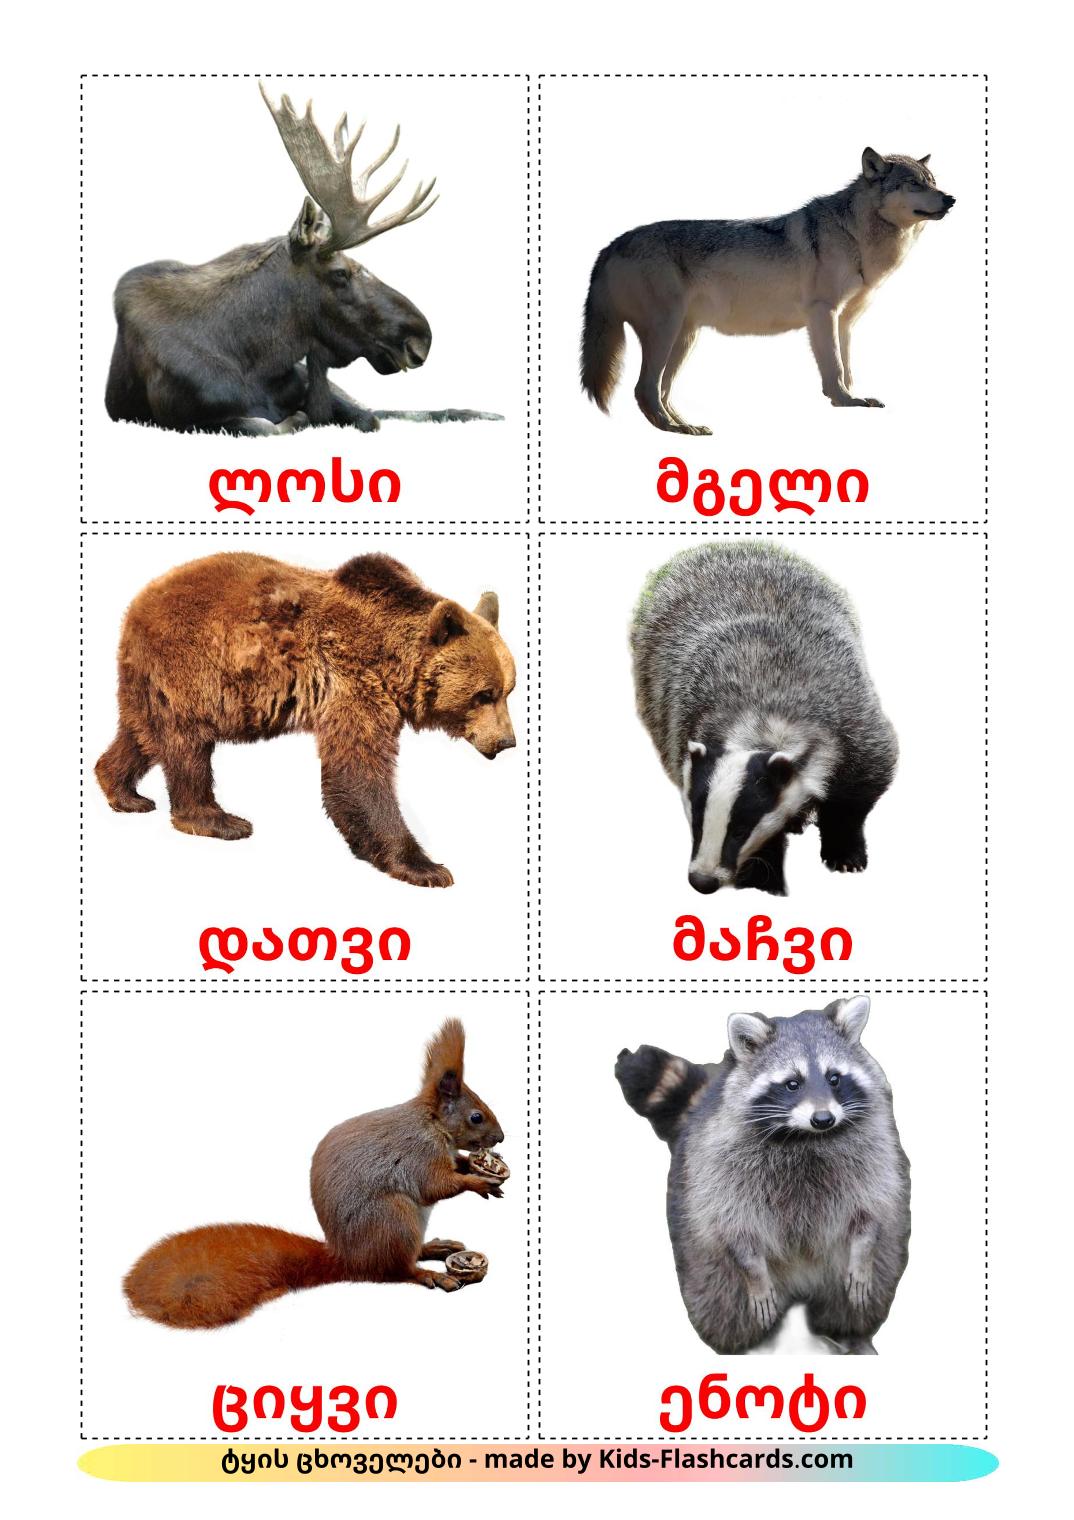 Animales del Bosque - 22 fichas de georgiano para imprimir gratis 